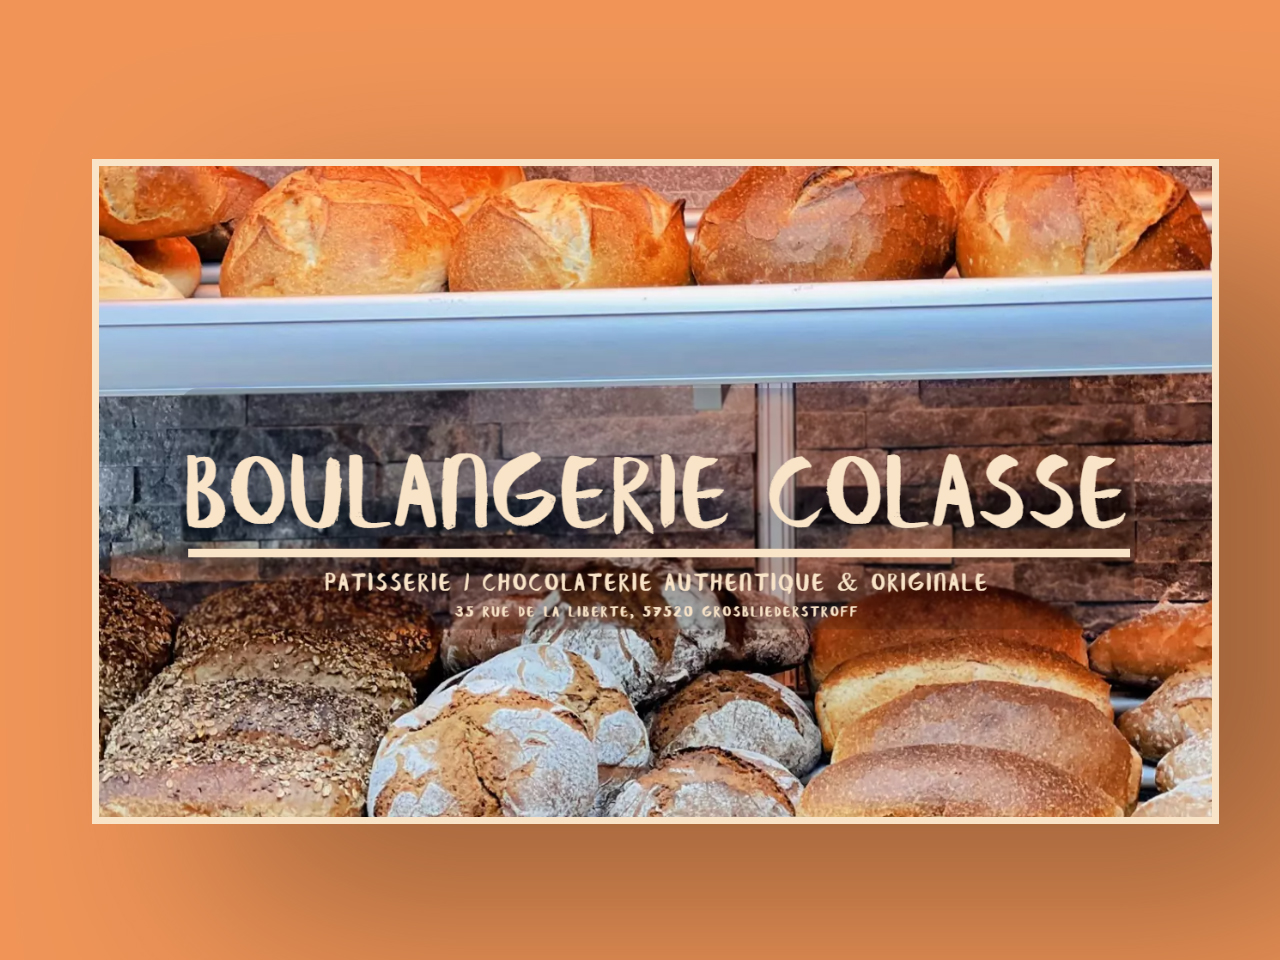 Boulangerie Colasse